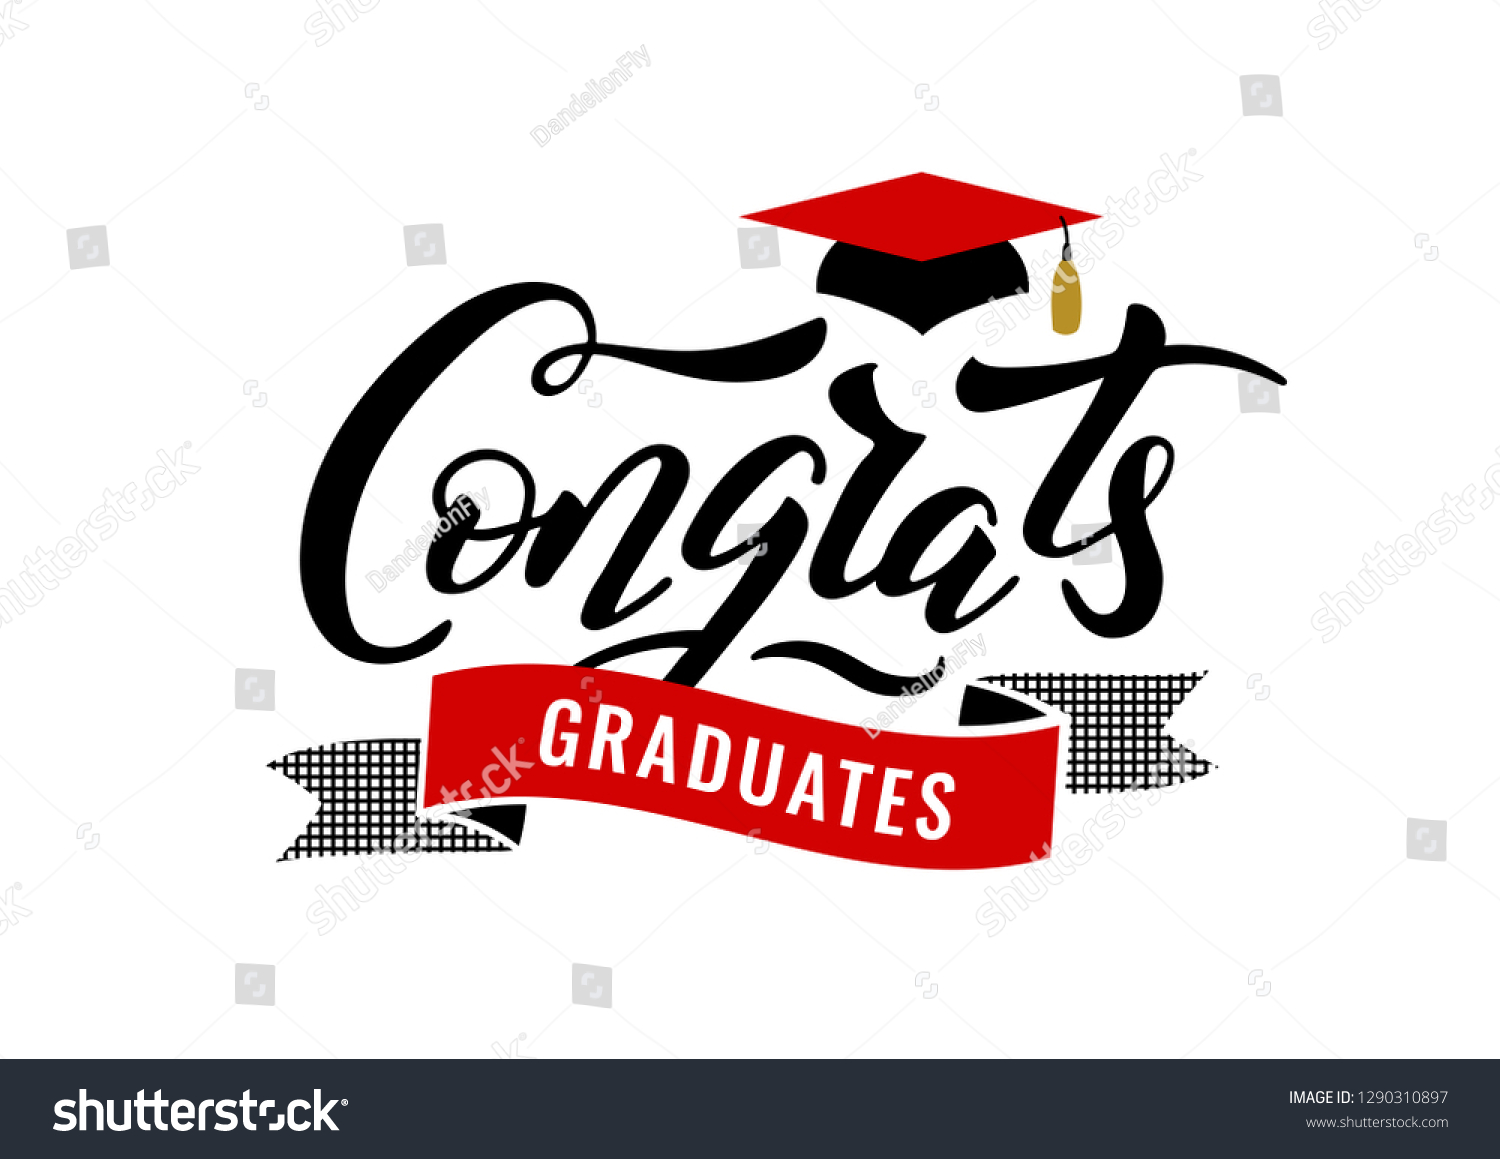 Congrats Graduates Class 2019 Graduation Party Stock Illustration ...